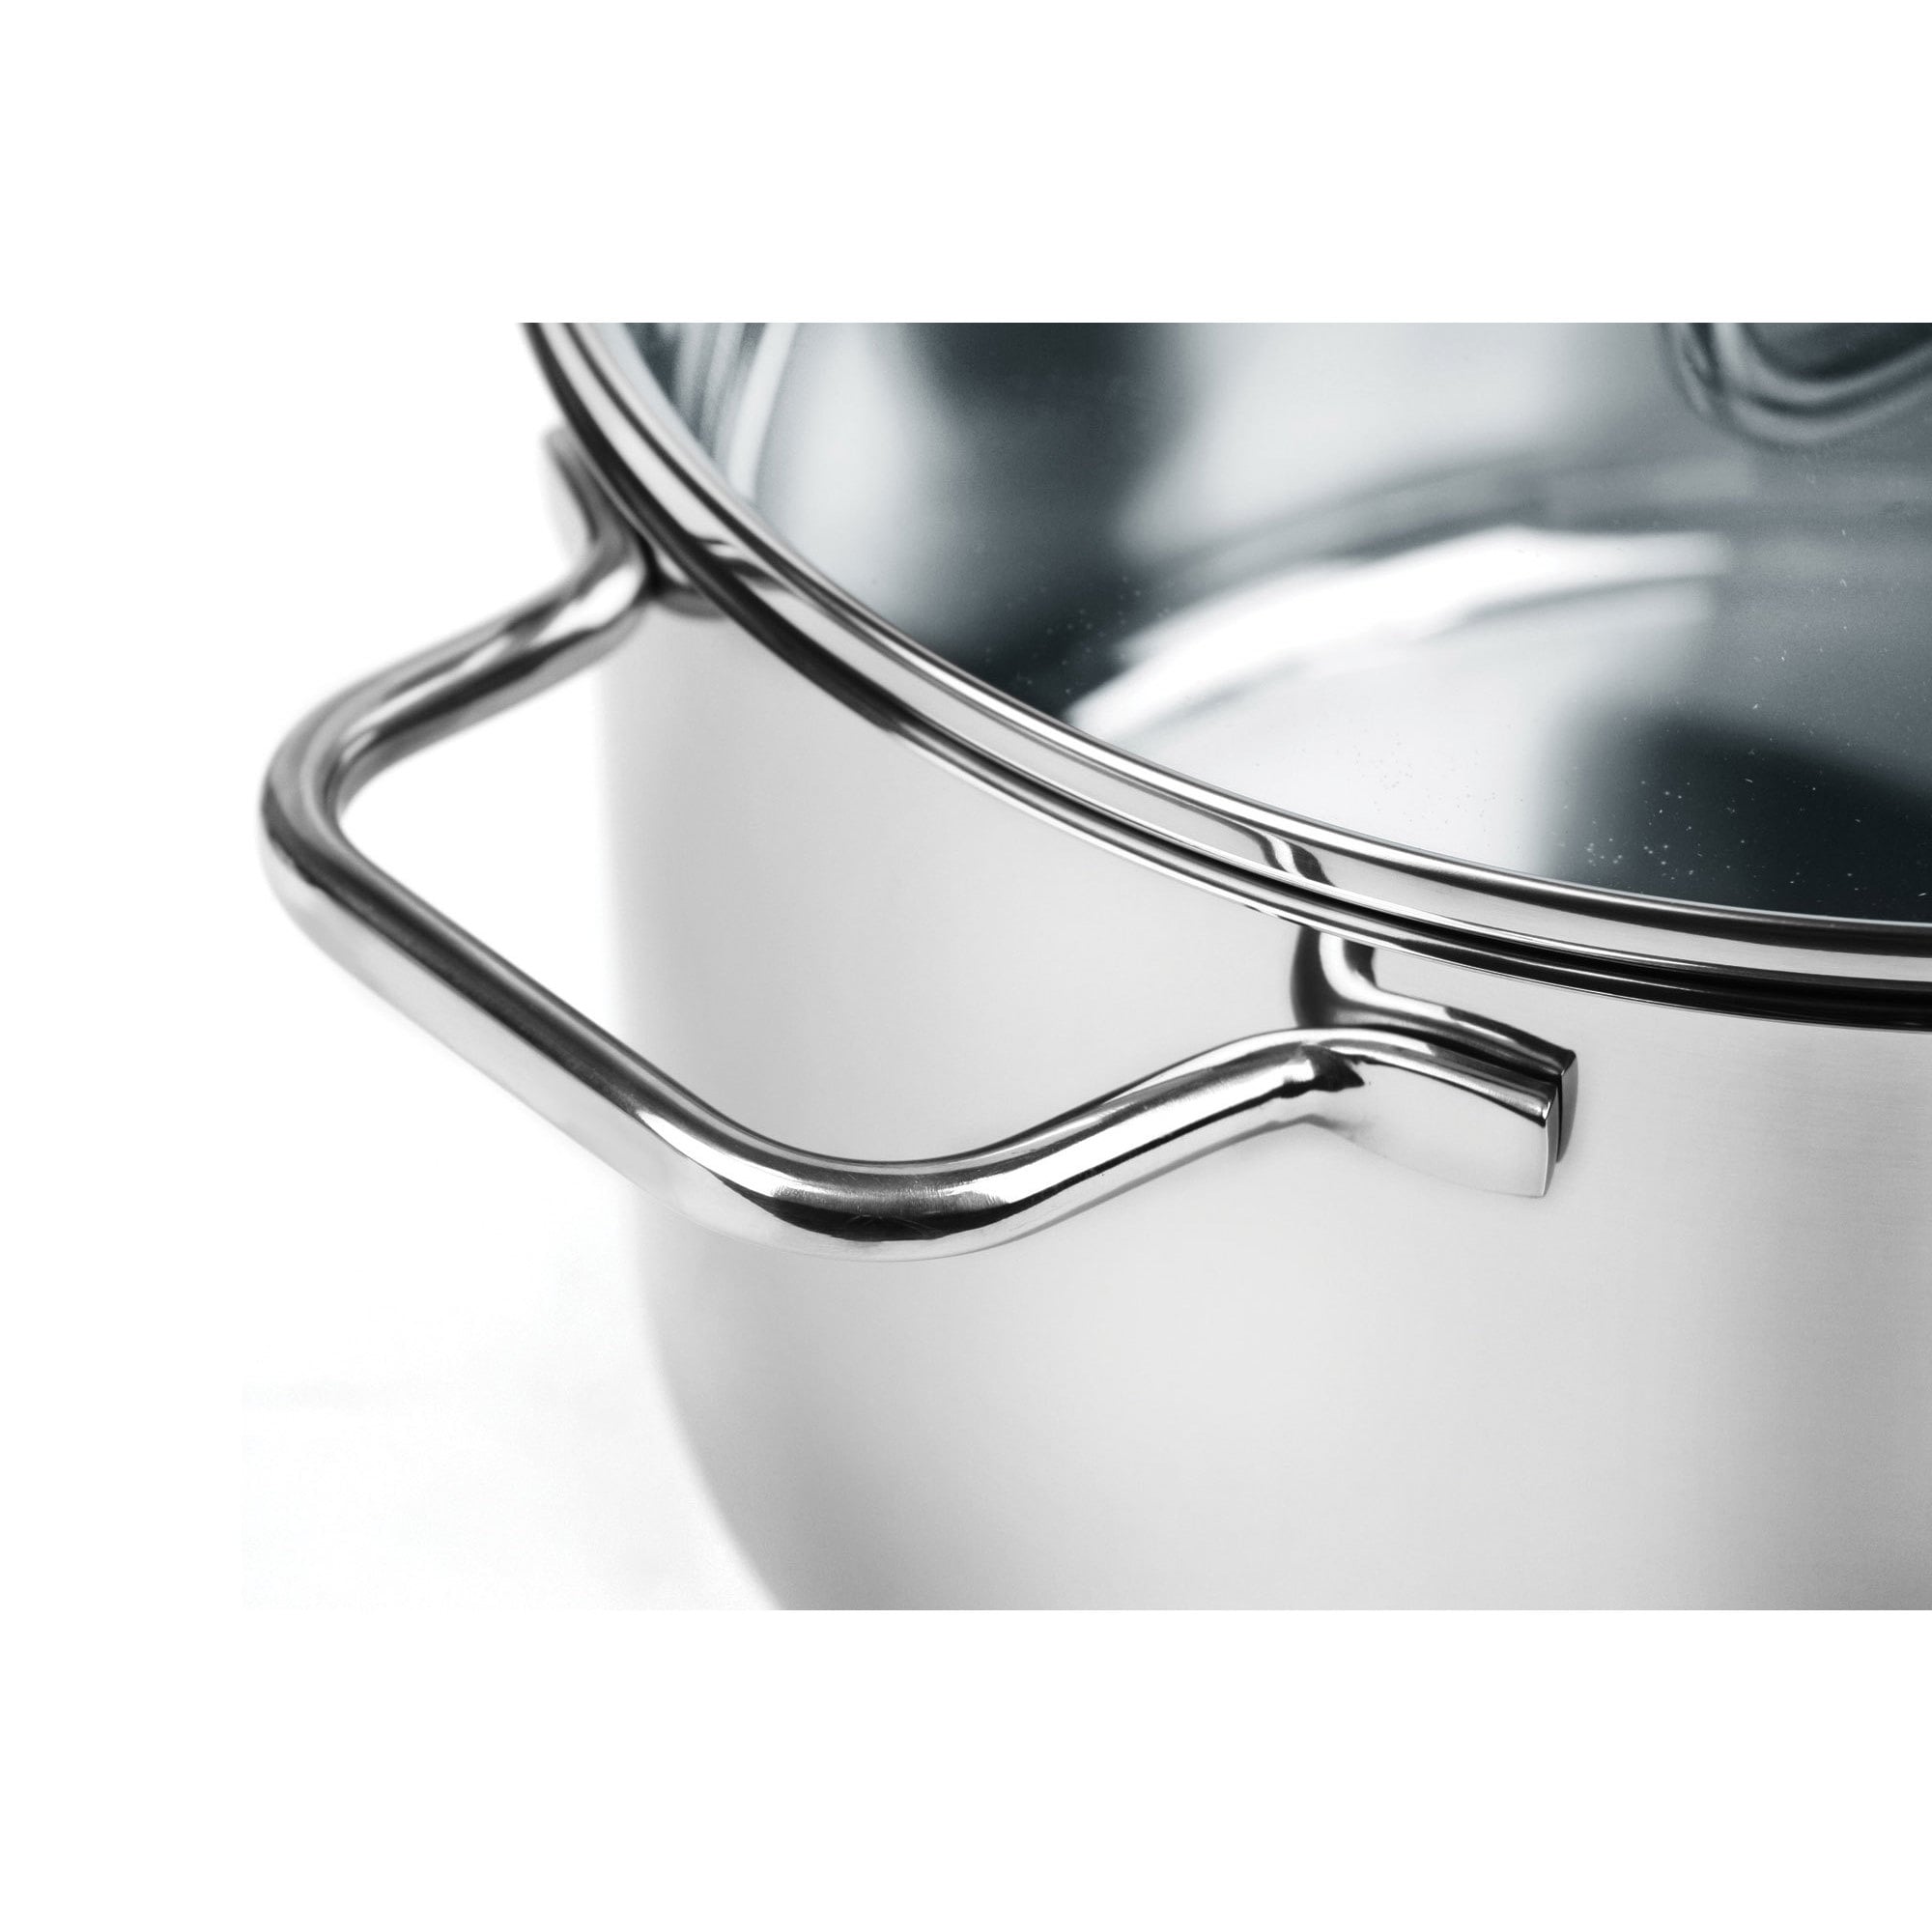 WMF Inspiration Stainless Steel Cookware 11-piece Set - Bed Bath & Beyond -  10442853